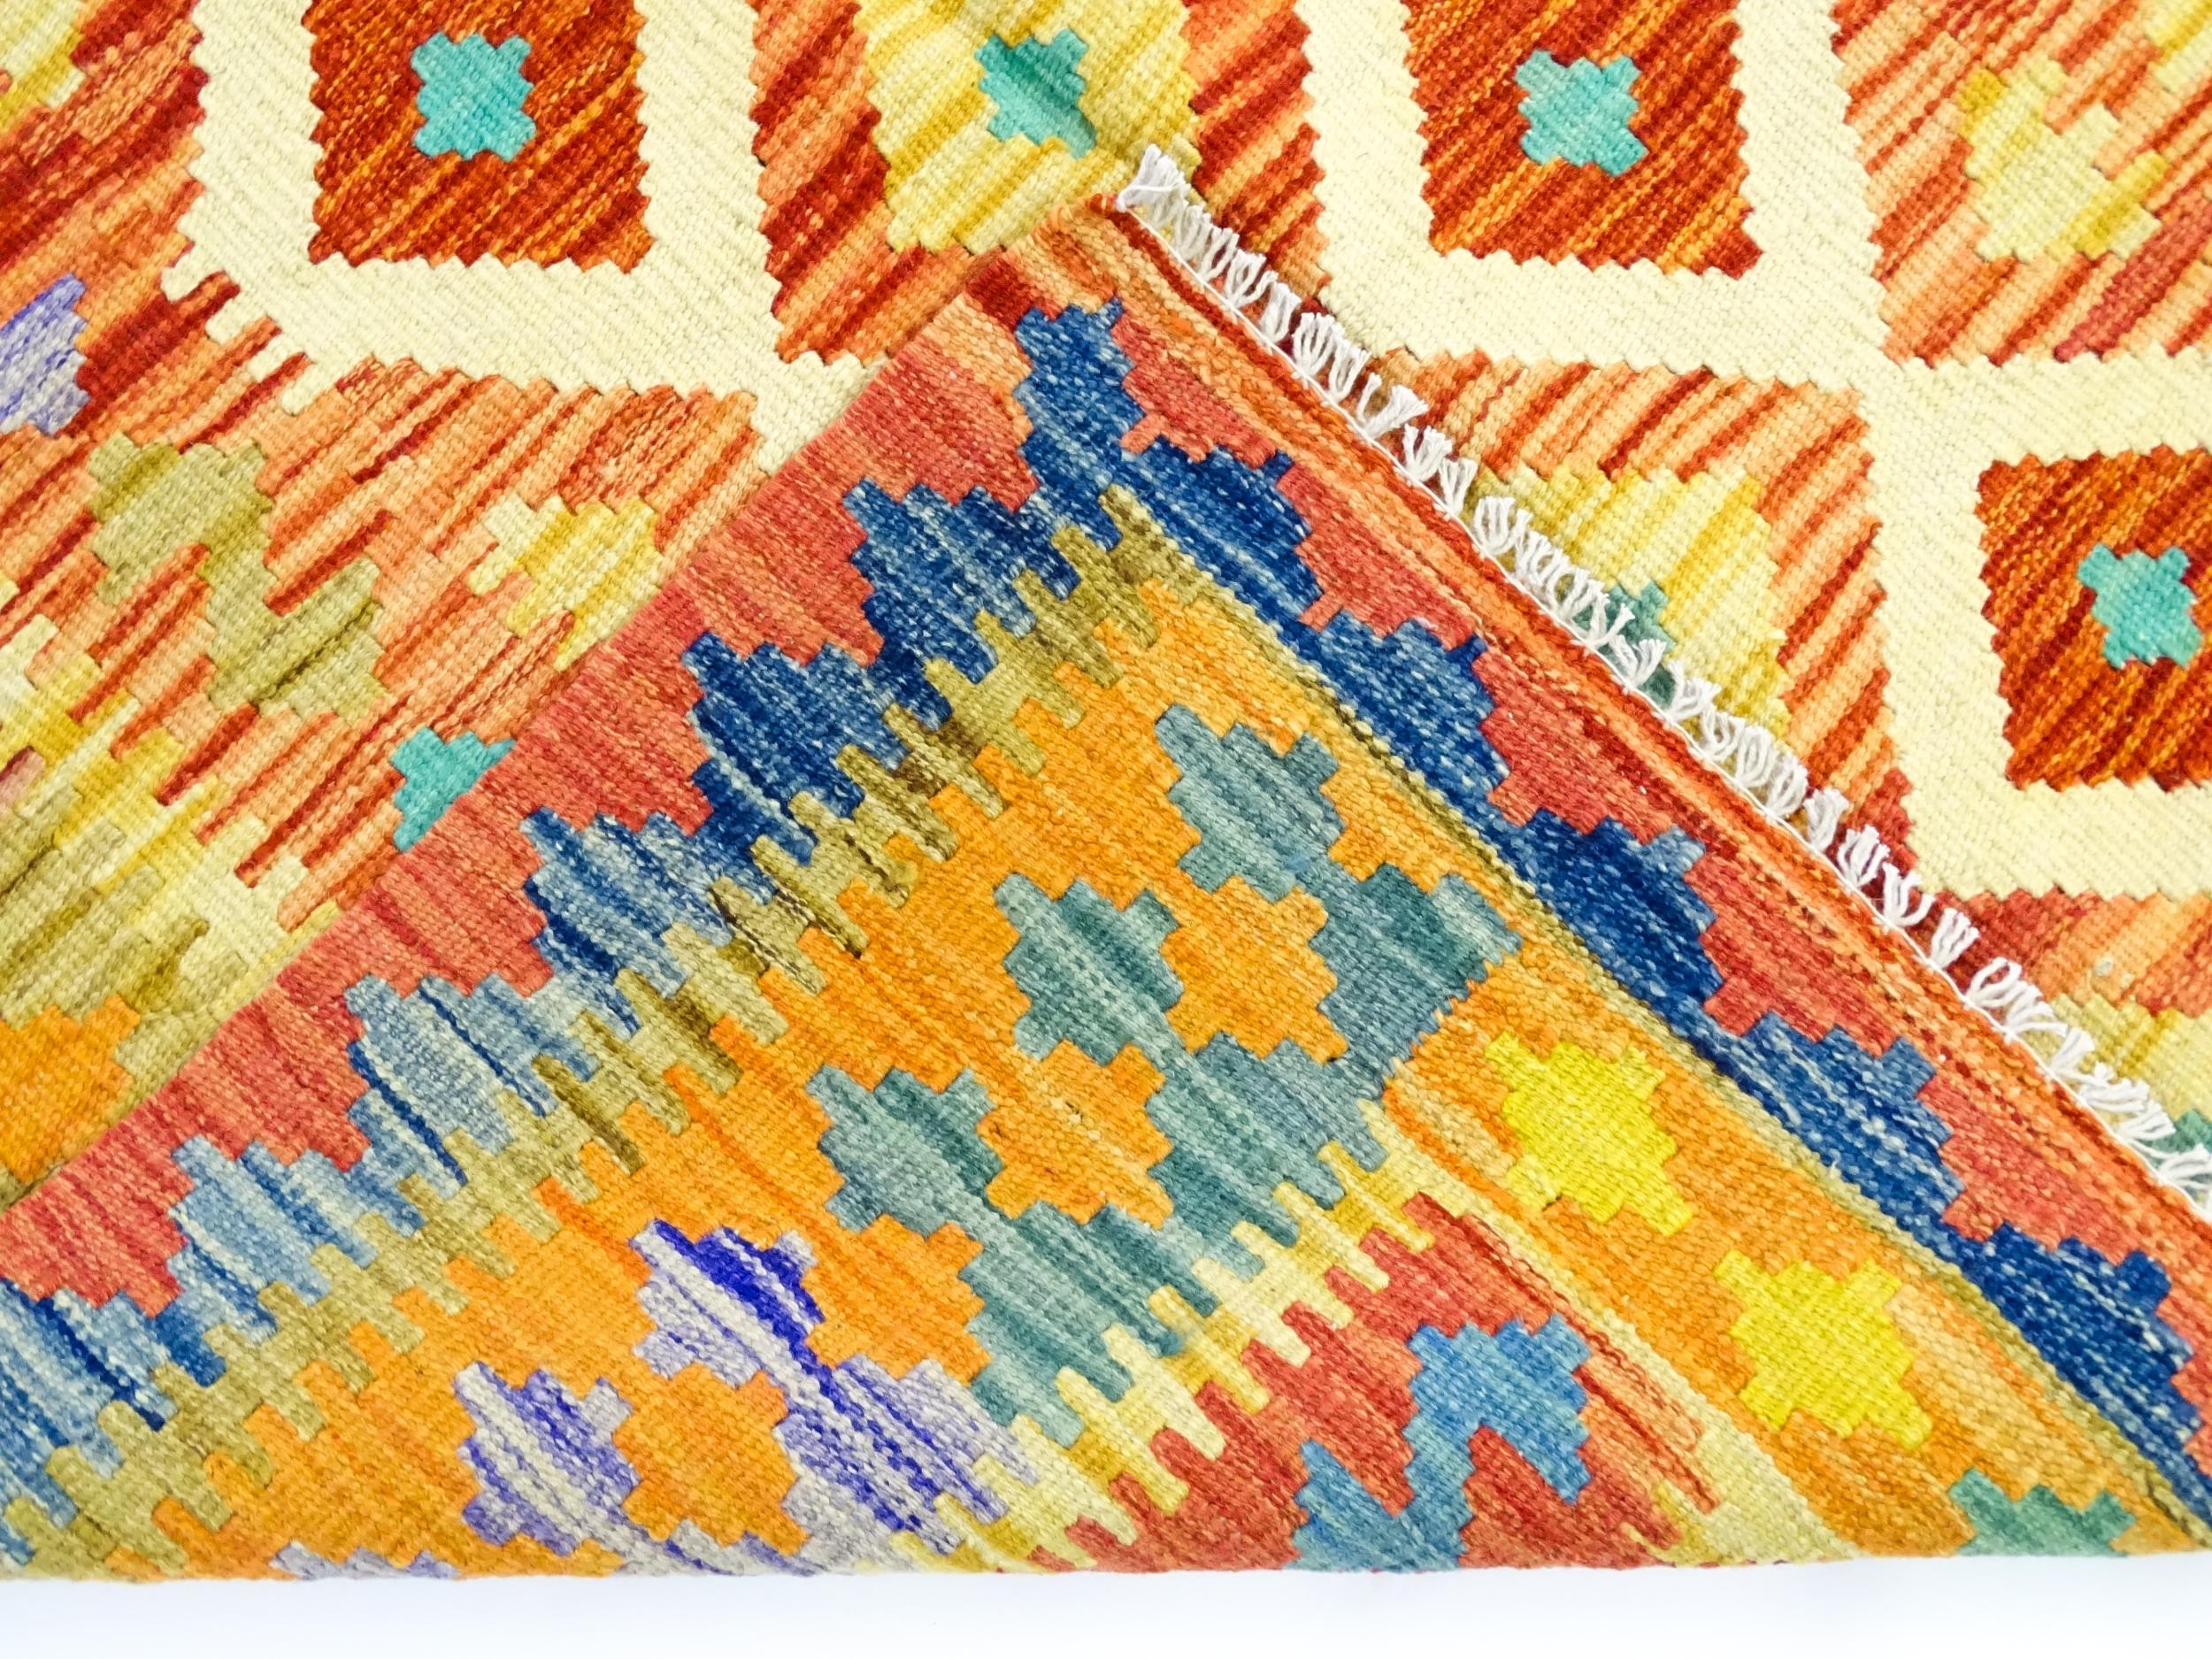 Carpet / Rug : A Turkish Anatolian kilim rug with repeating geometric motifs. Approx. 72" x 48" - Image 2 of 7